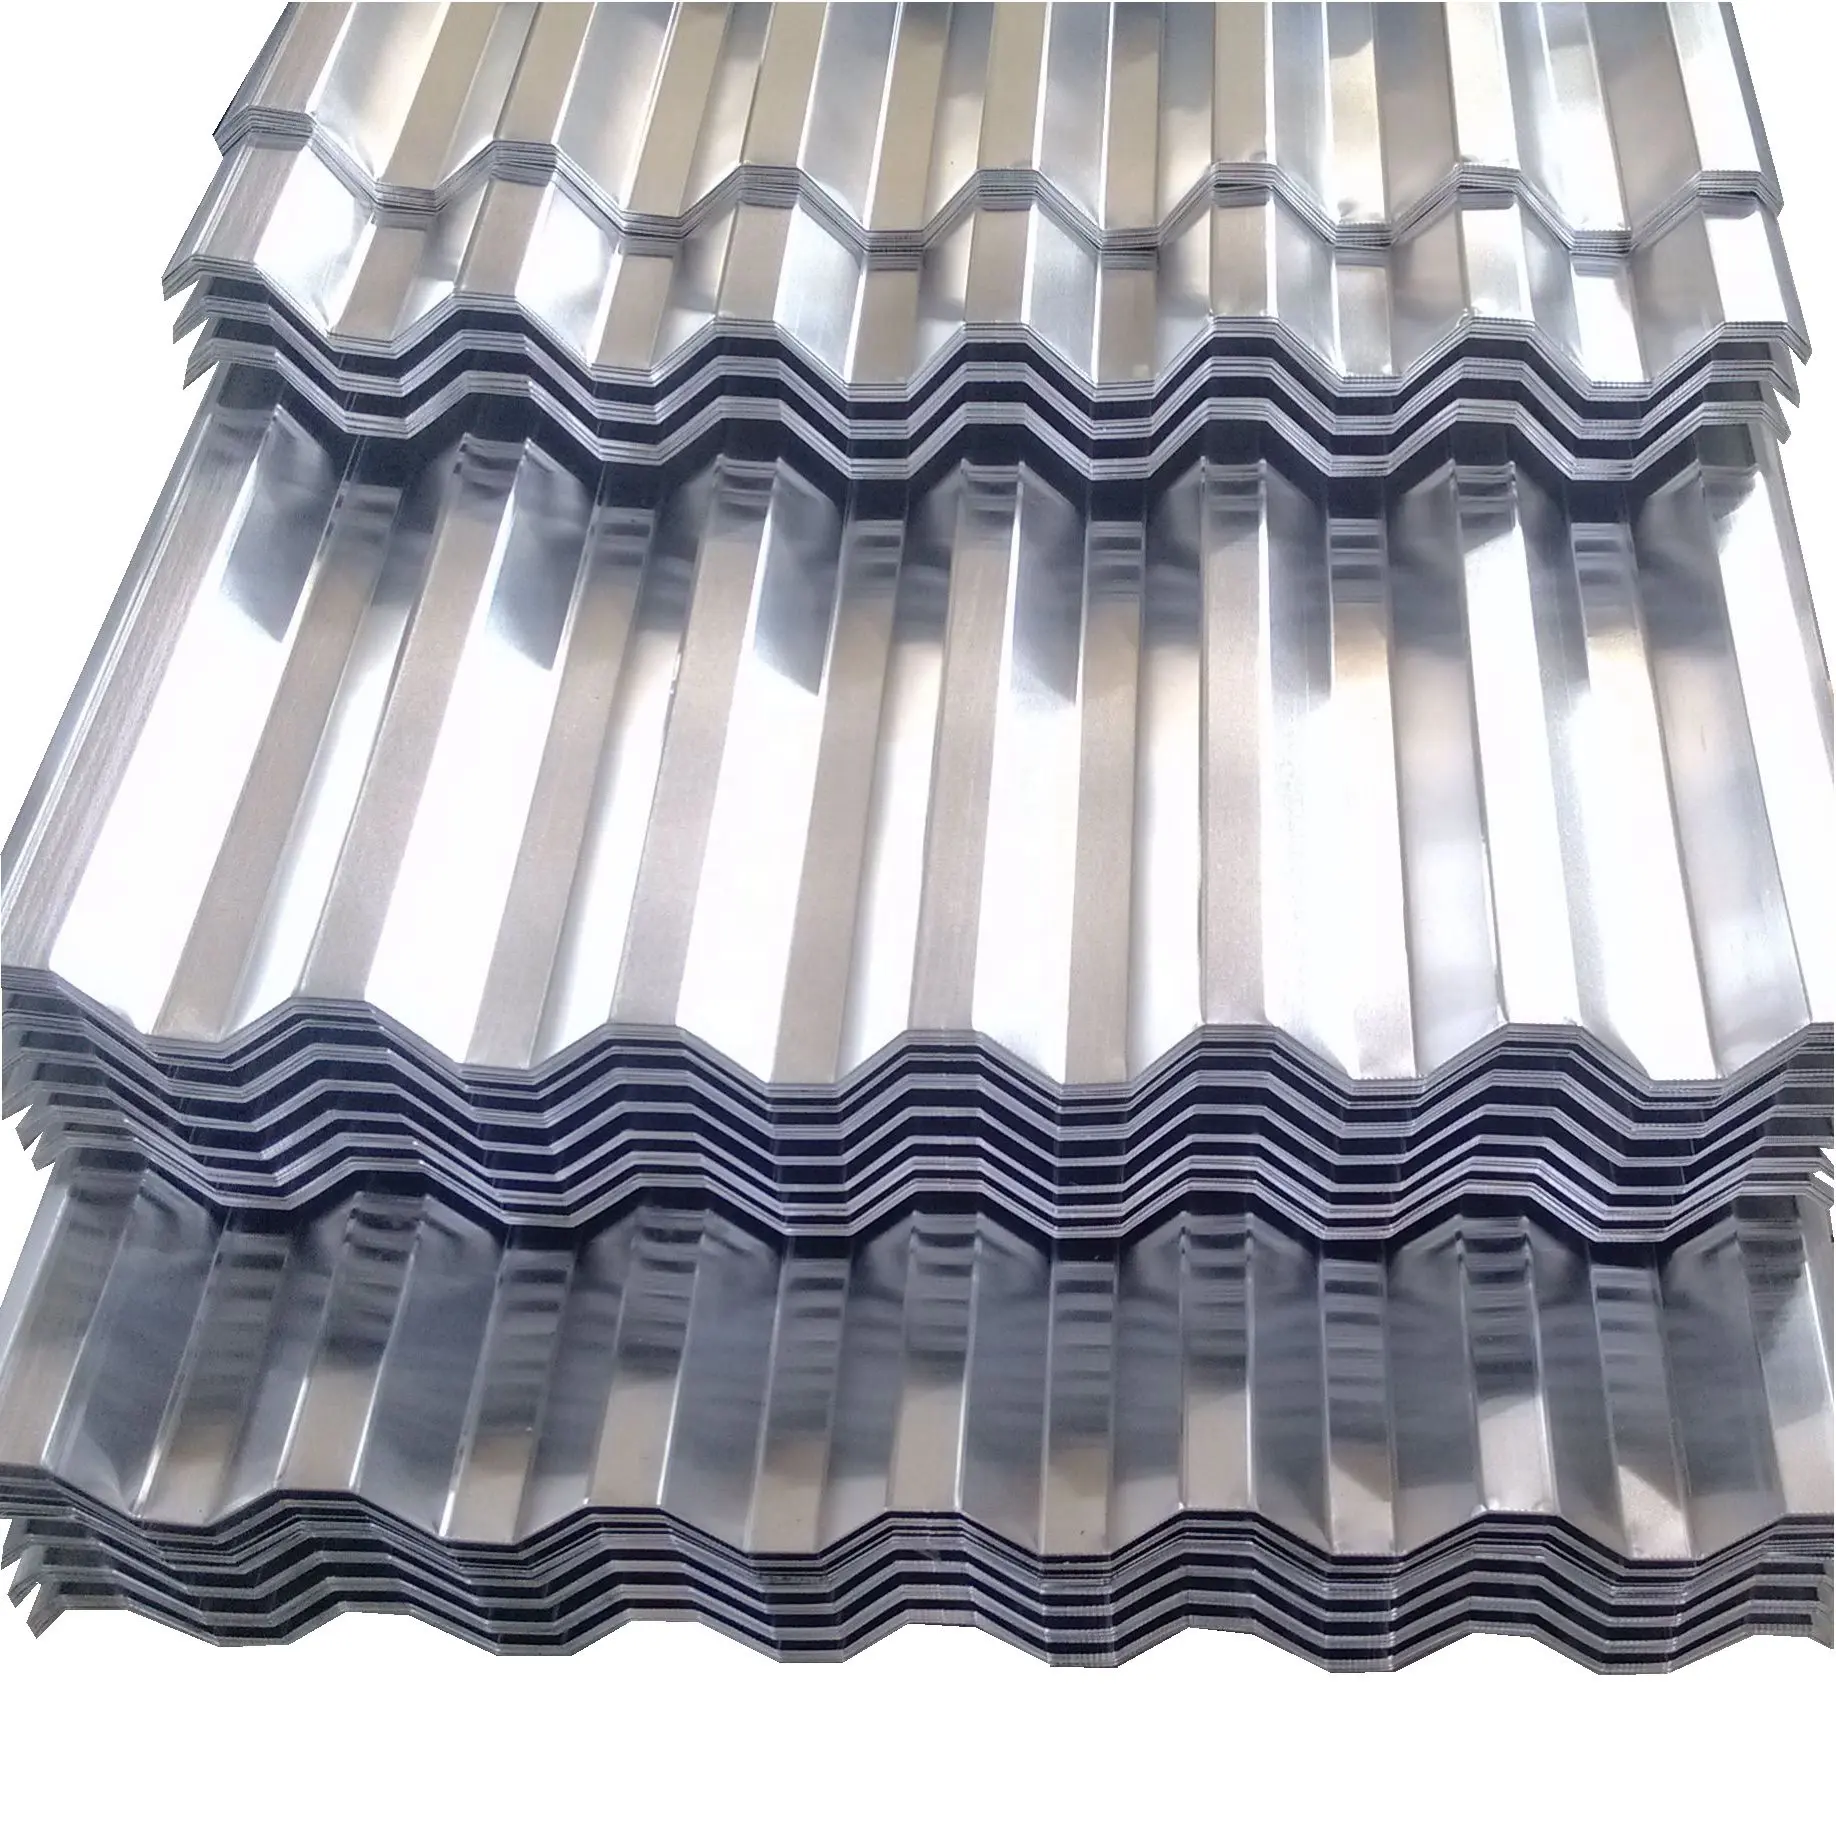 Corrugated Aluminum Roofing Sheet